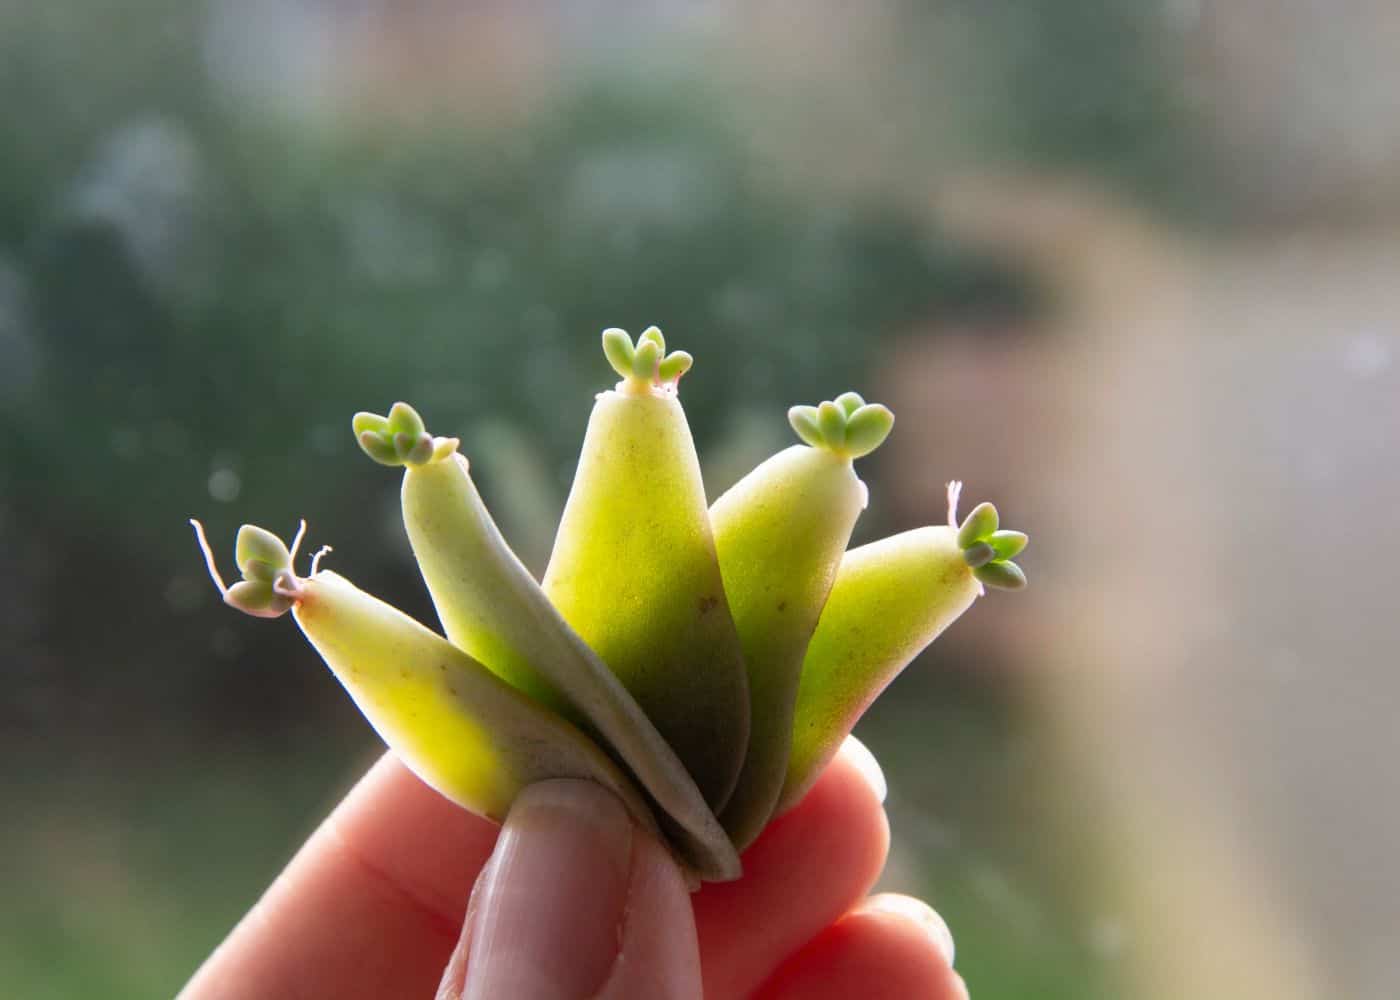 Baby succulents